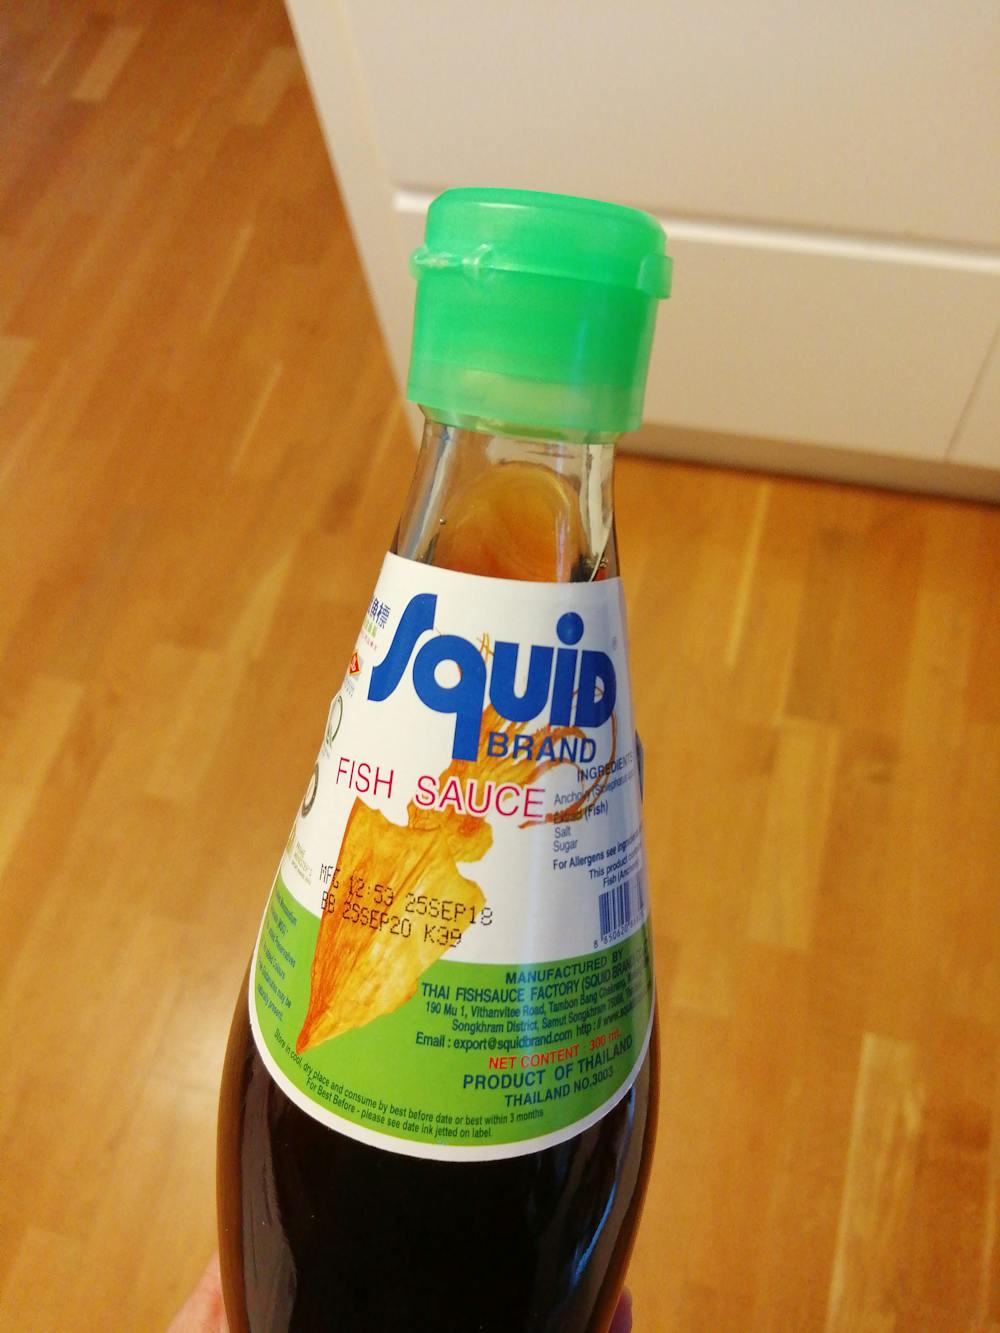 Fish sauce, Squid brand